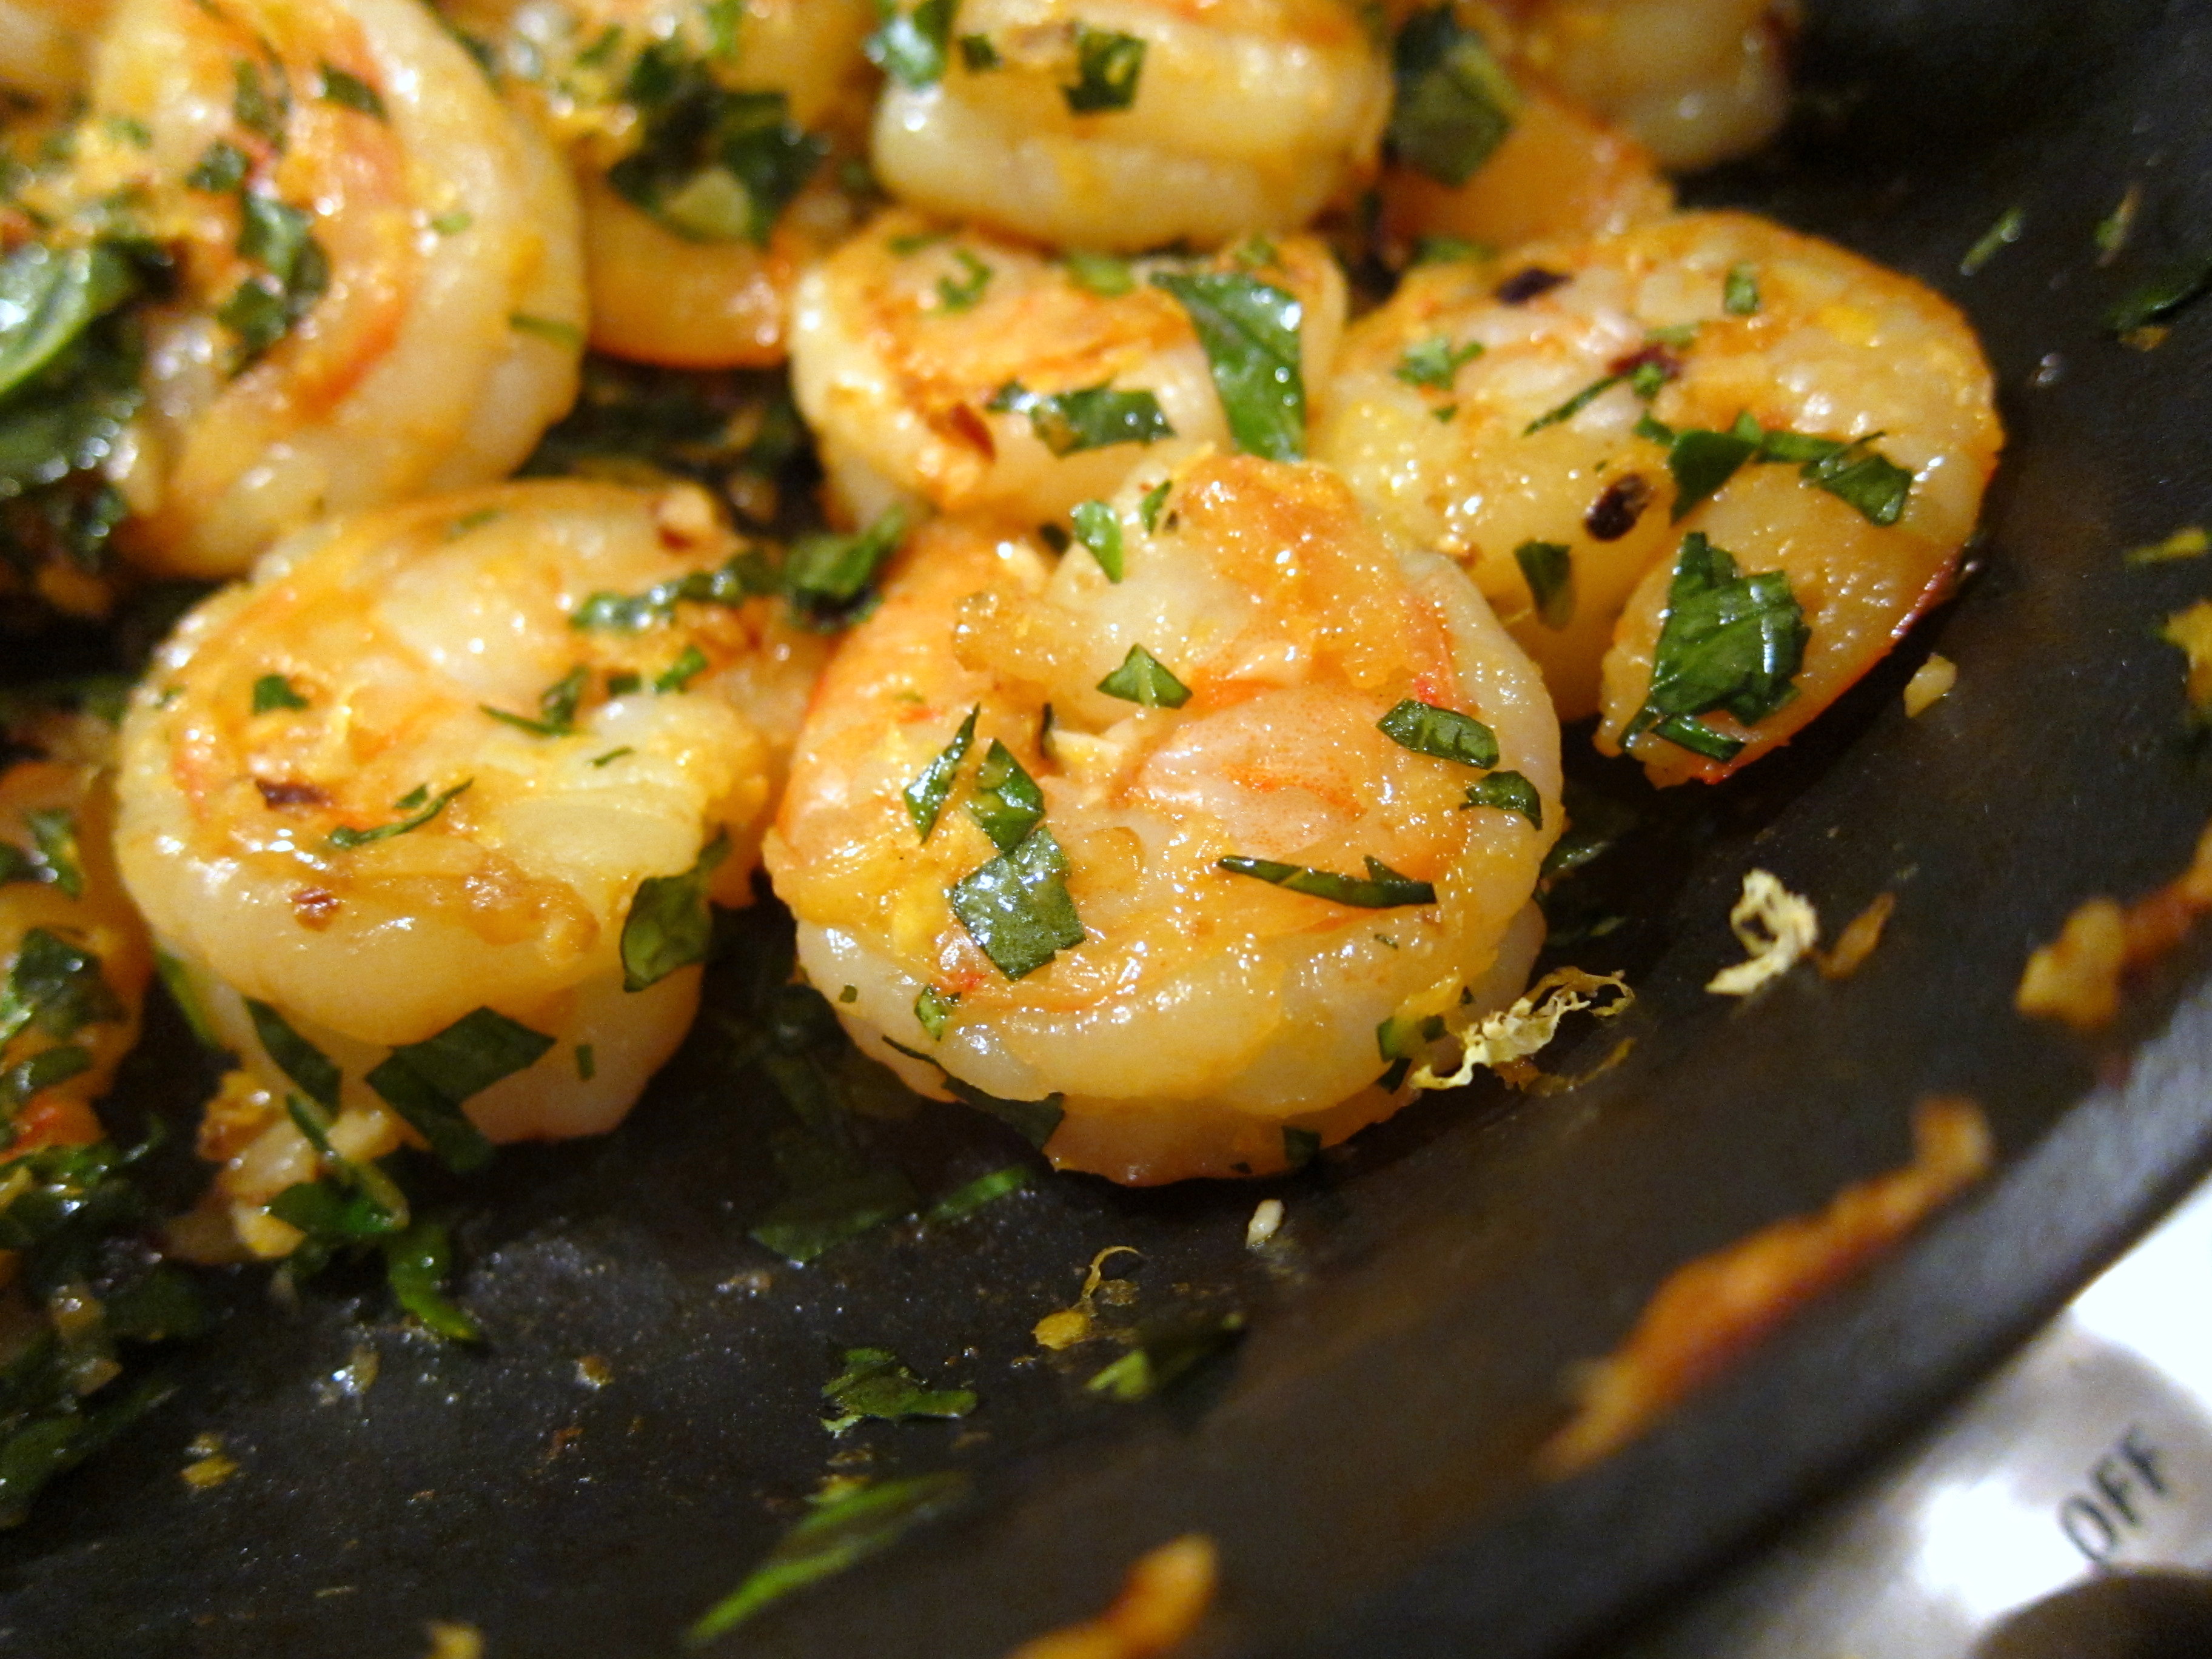 Cooking shrimp photo